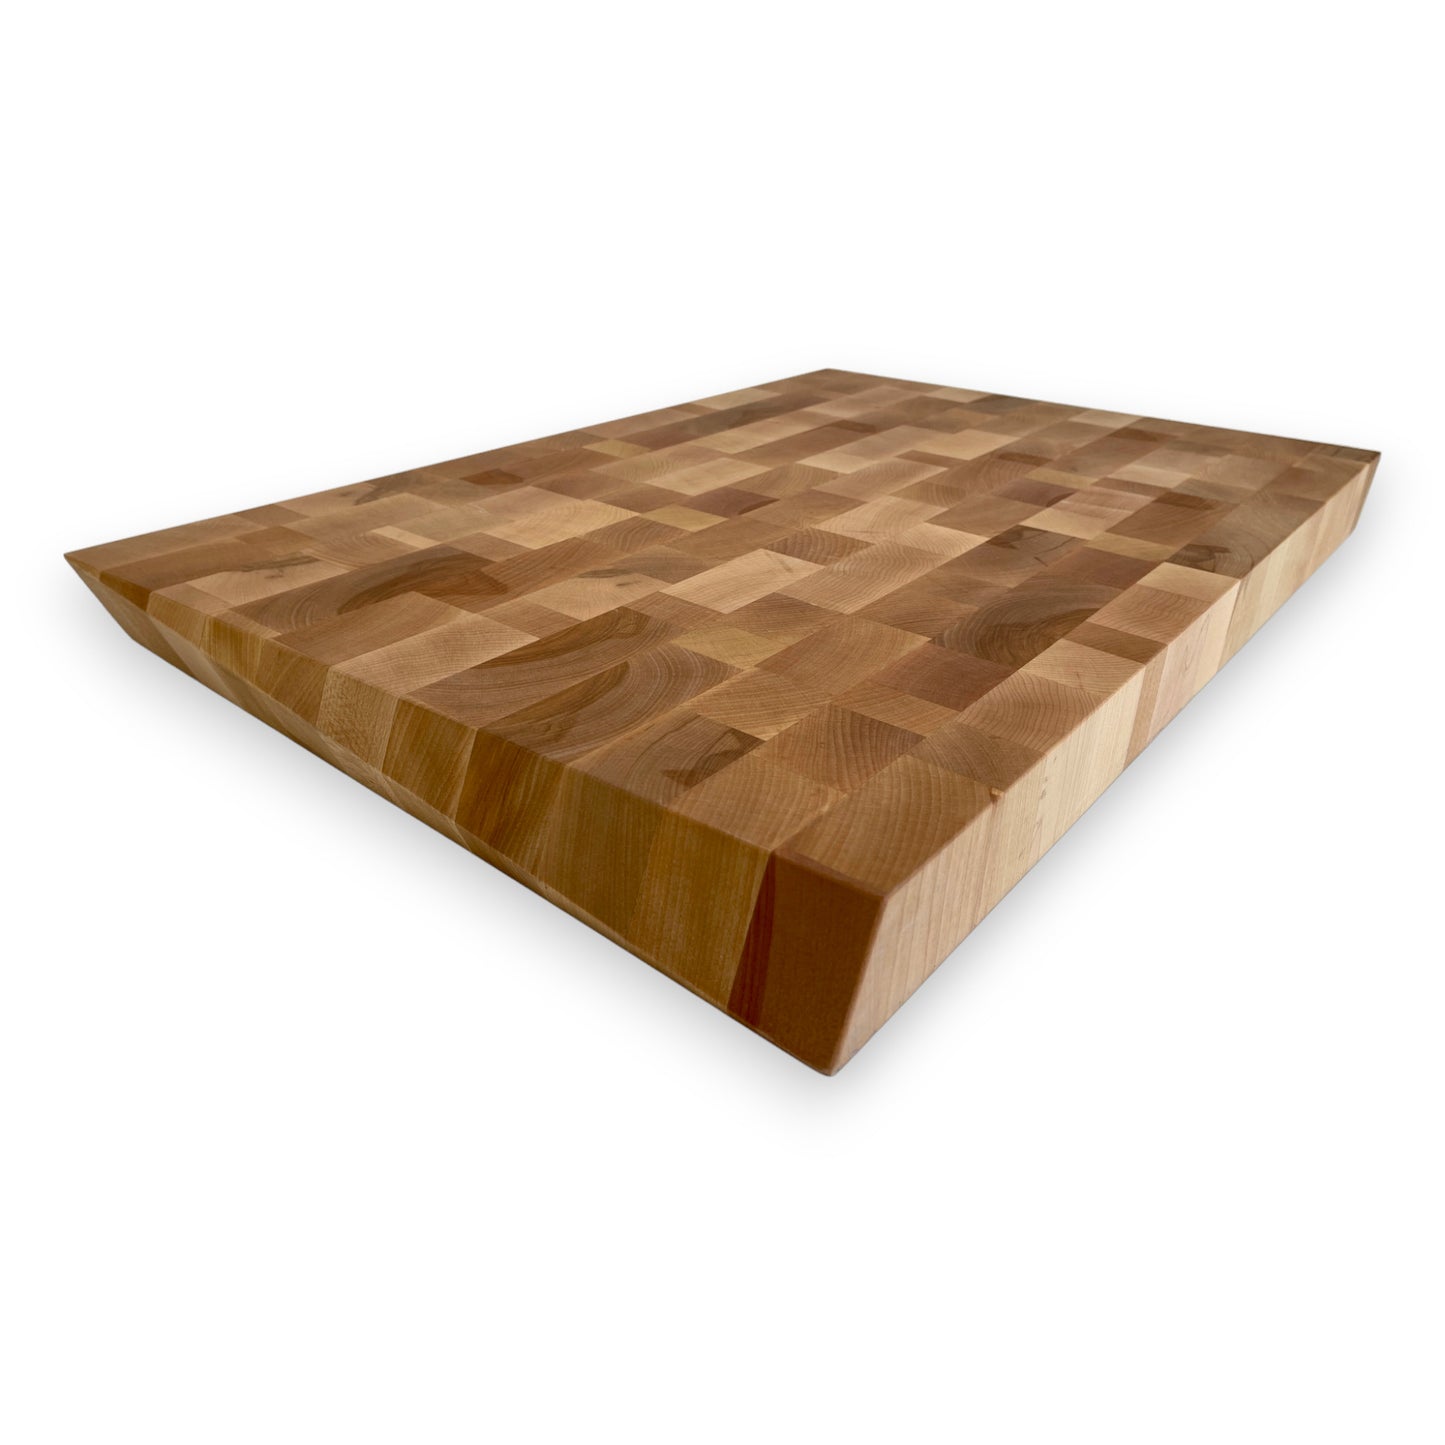 2" Cherry Wood Z-Shaped End Grain Cutting Board - BOISWOOD